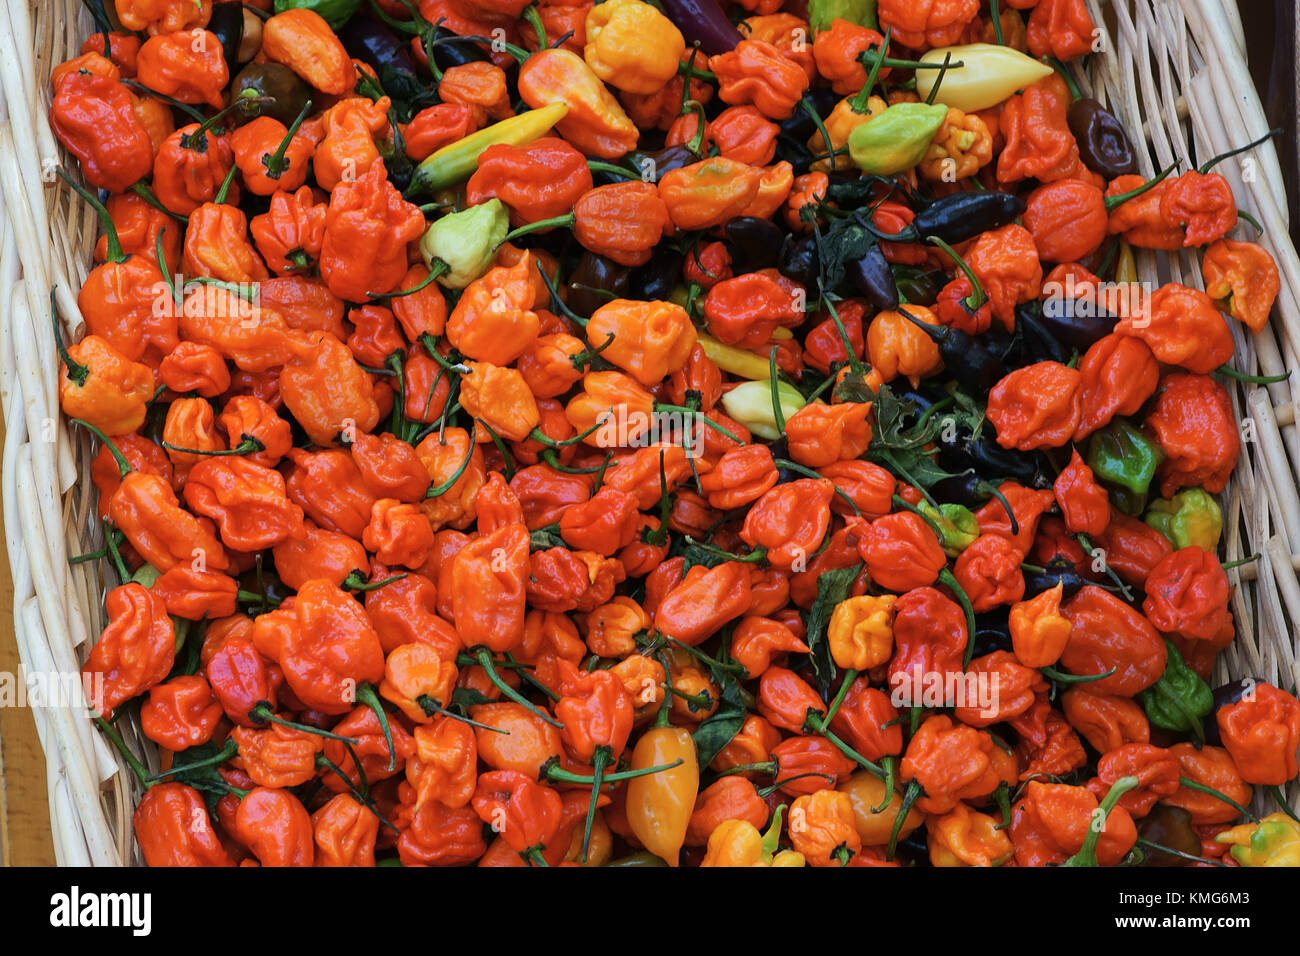 Red Hot Chili Pfeffer in Korb - Siena, Italien, essen Markt Stockfoto